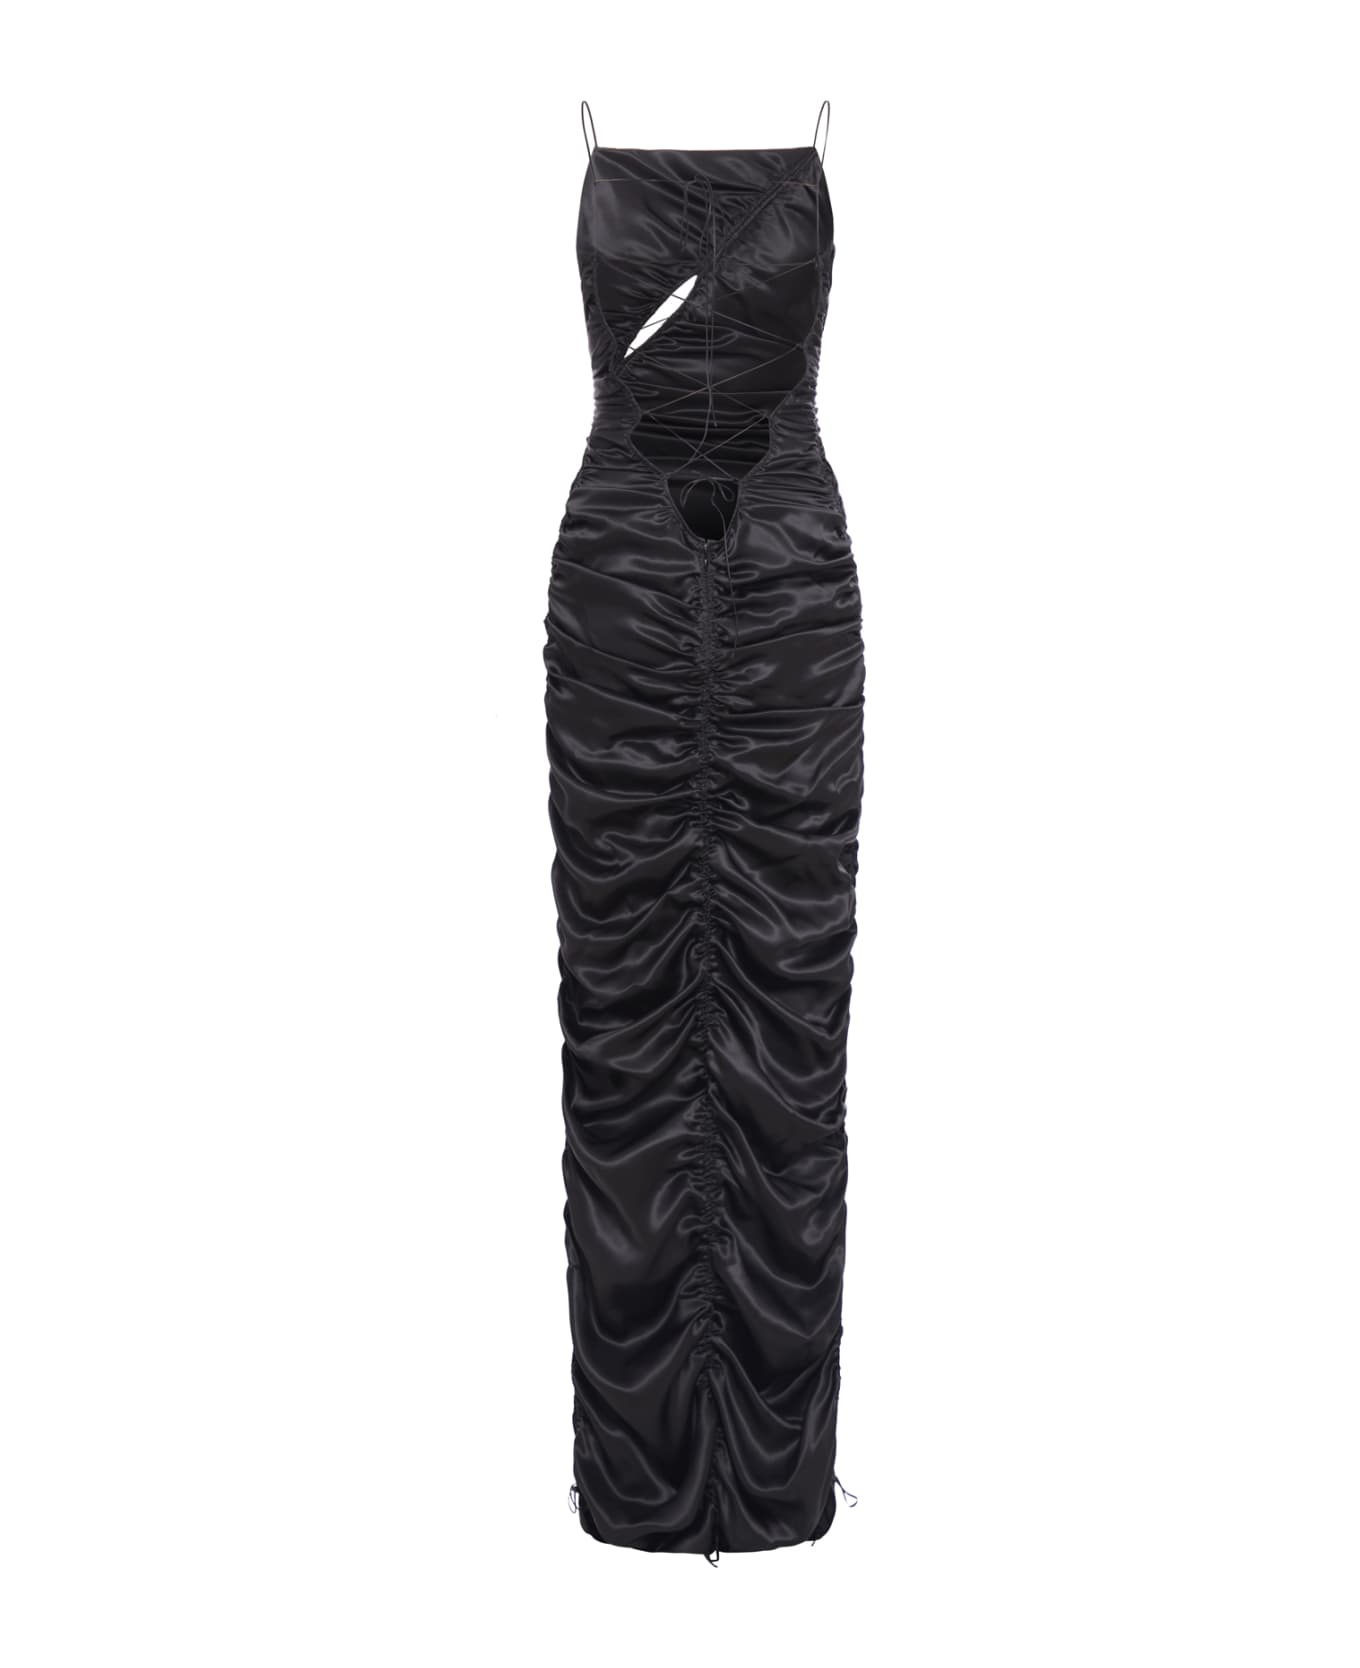 Del Core Draped Dress With Drawstring Detail - Black